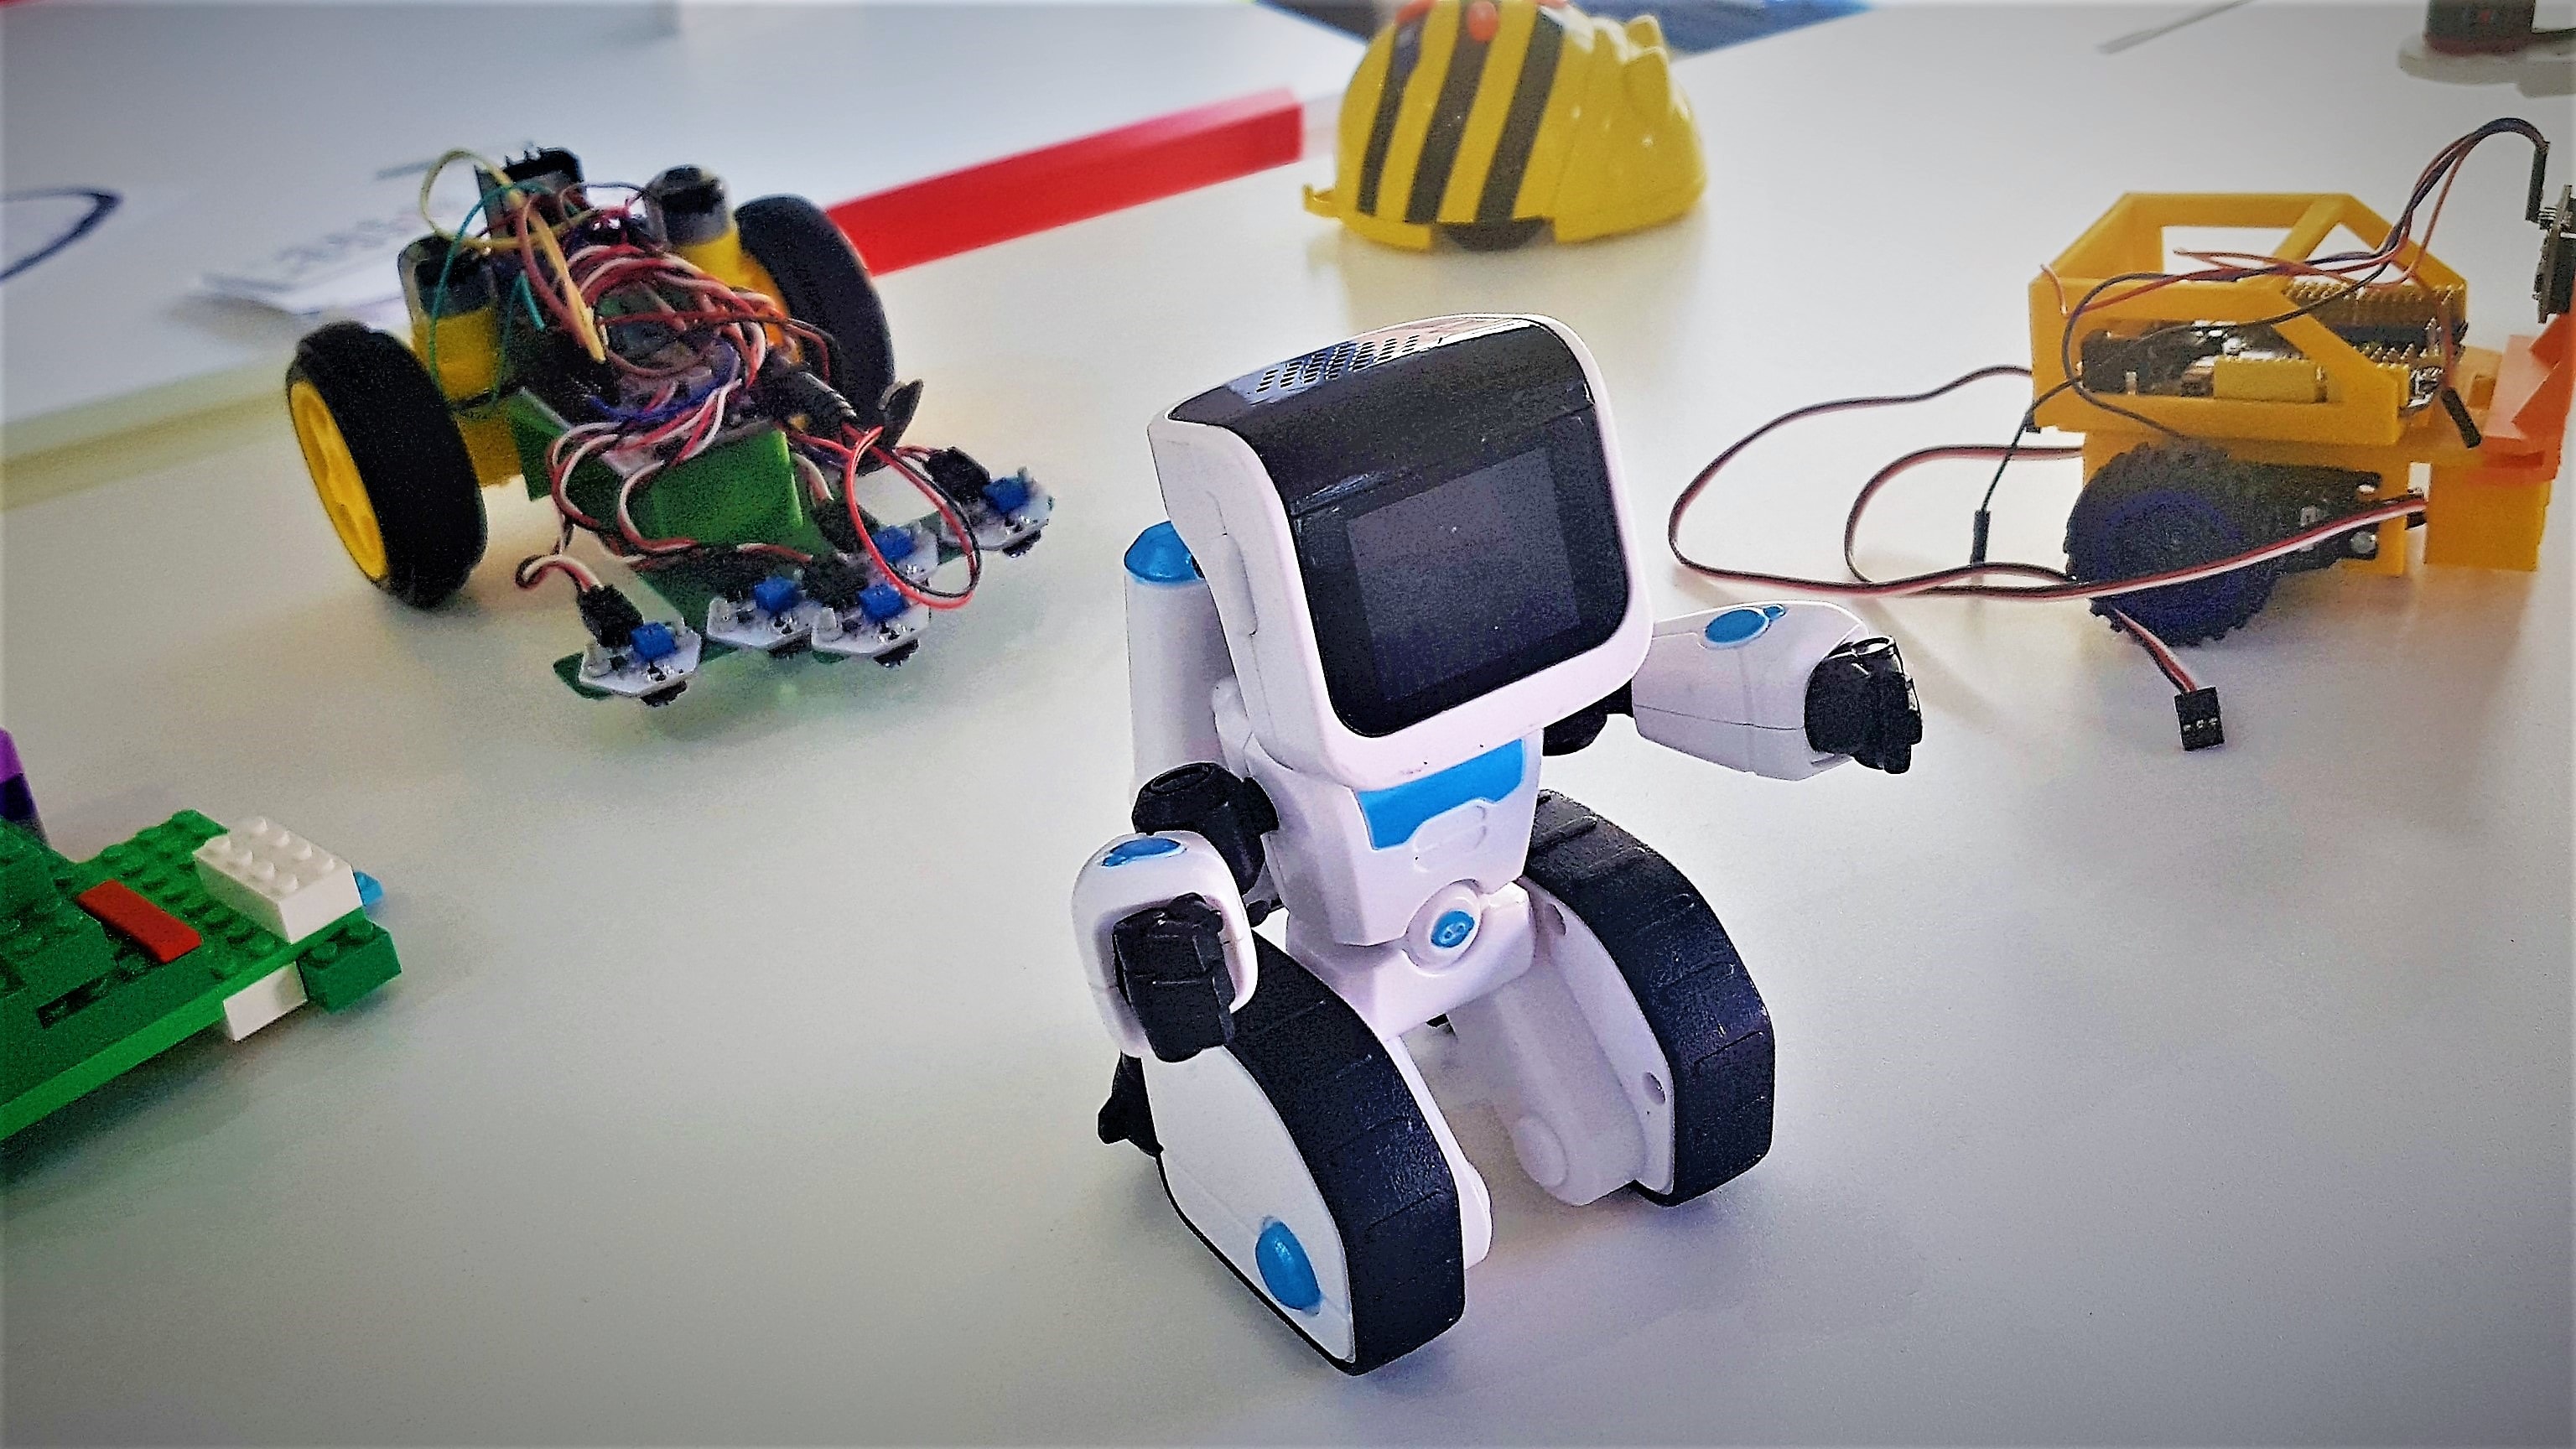 kits de robotica educativa en el aula